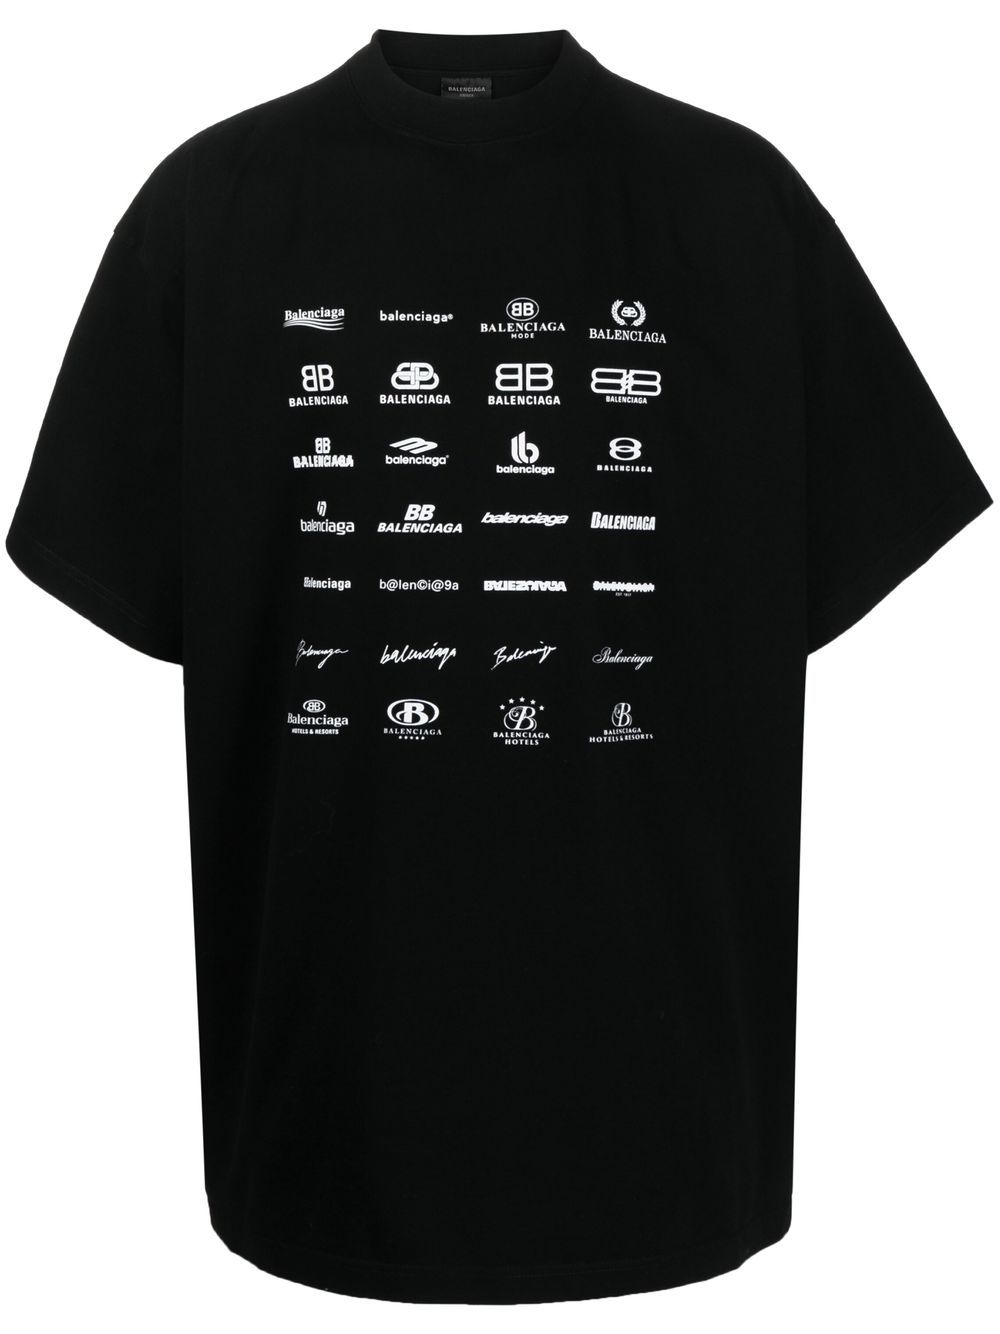 Tee shirt print designs Stock Vector by ©z0504574832.gmail.com 142813055